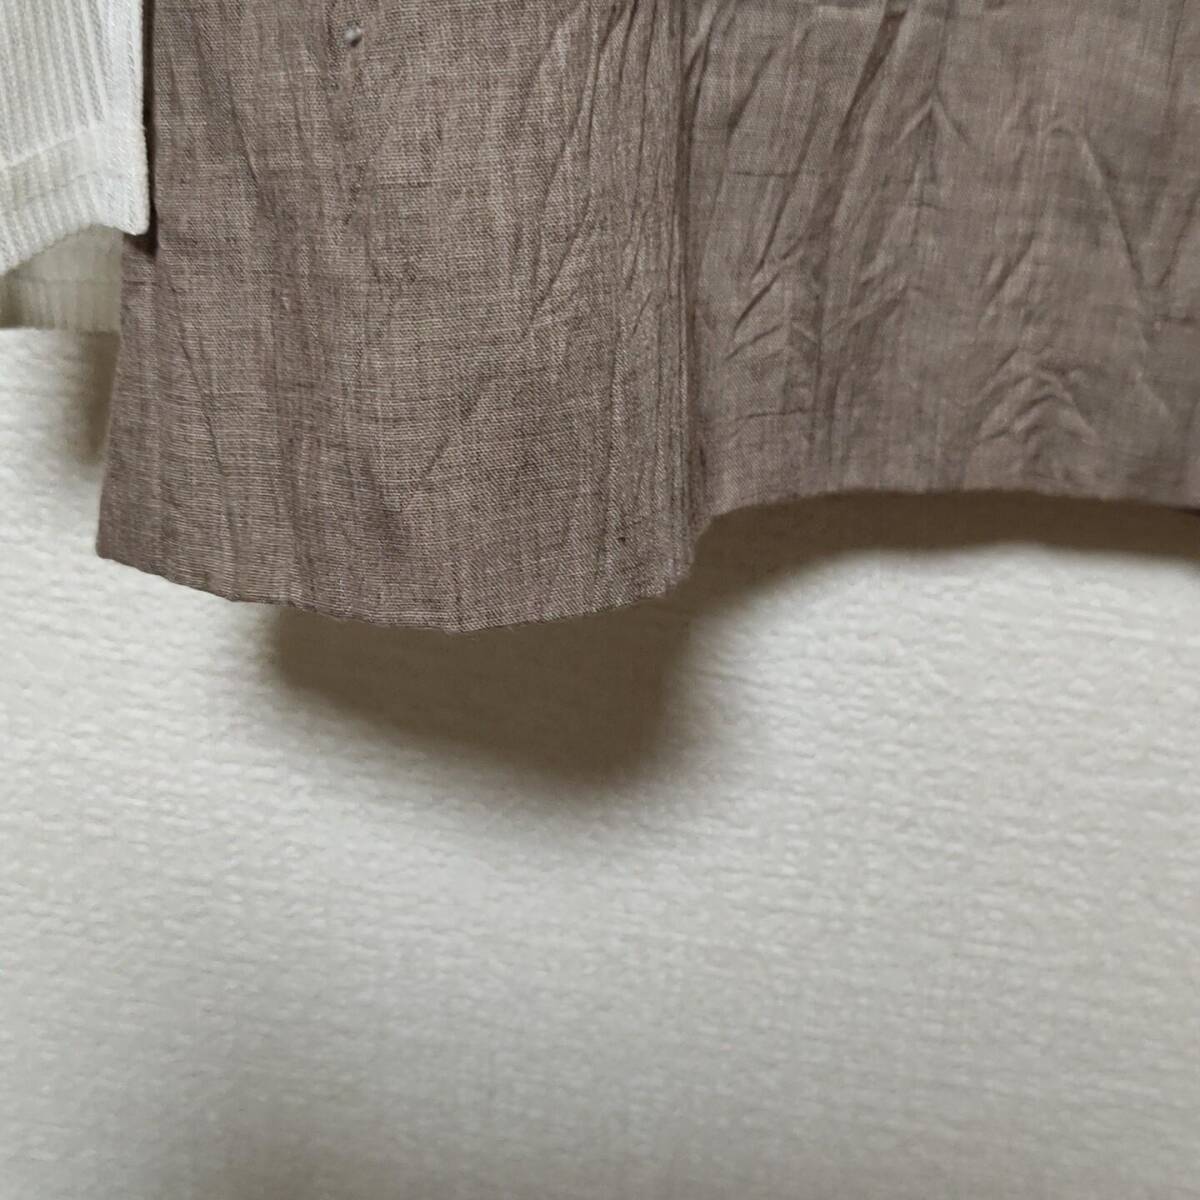 FASHION MESSAGE 半袖カットソー 白 ブラウン 袖口 美品 リメイク 縫い目 汚れ裾 サイズ フリーサイズ ×1509_画像8